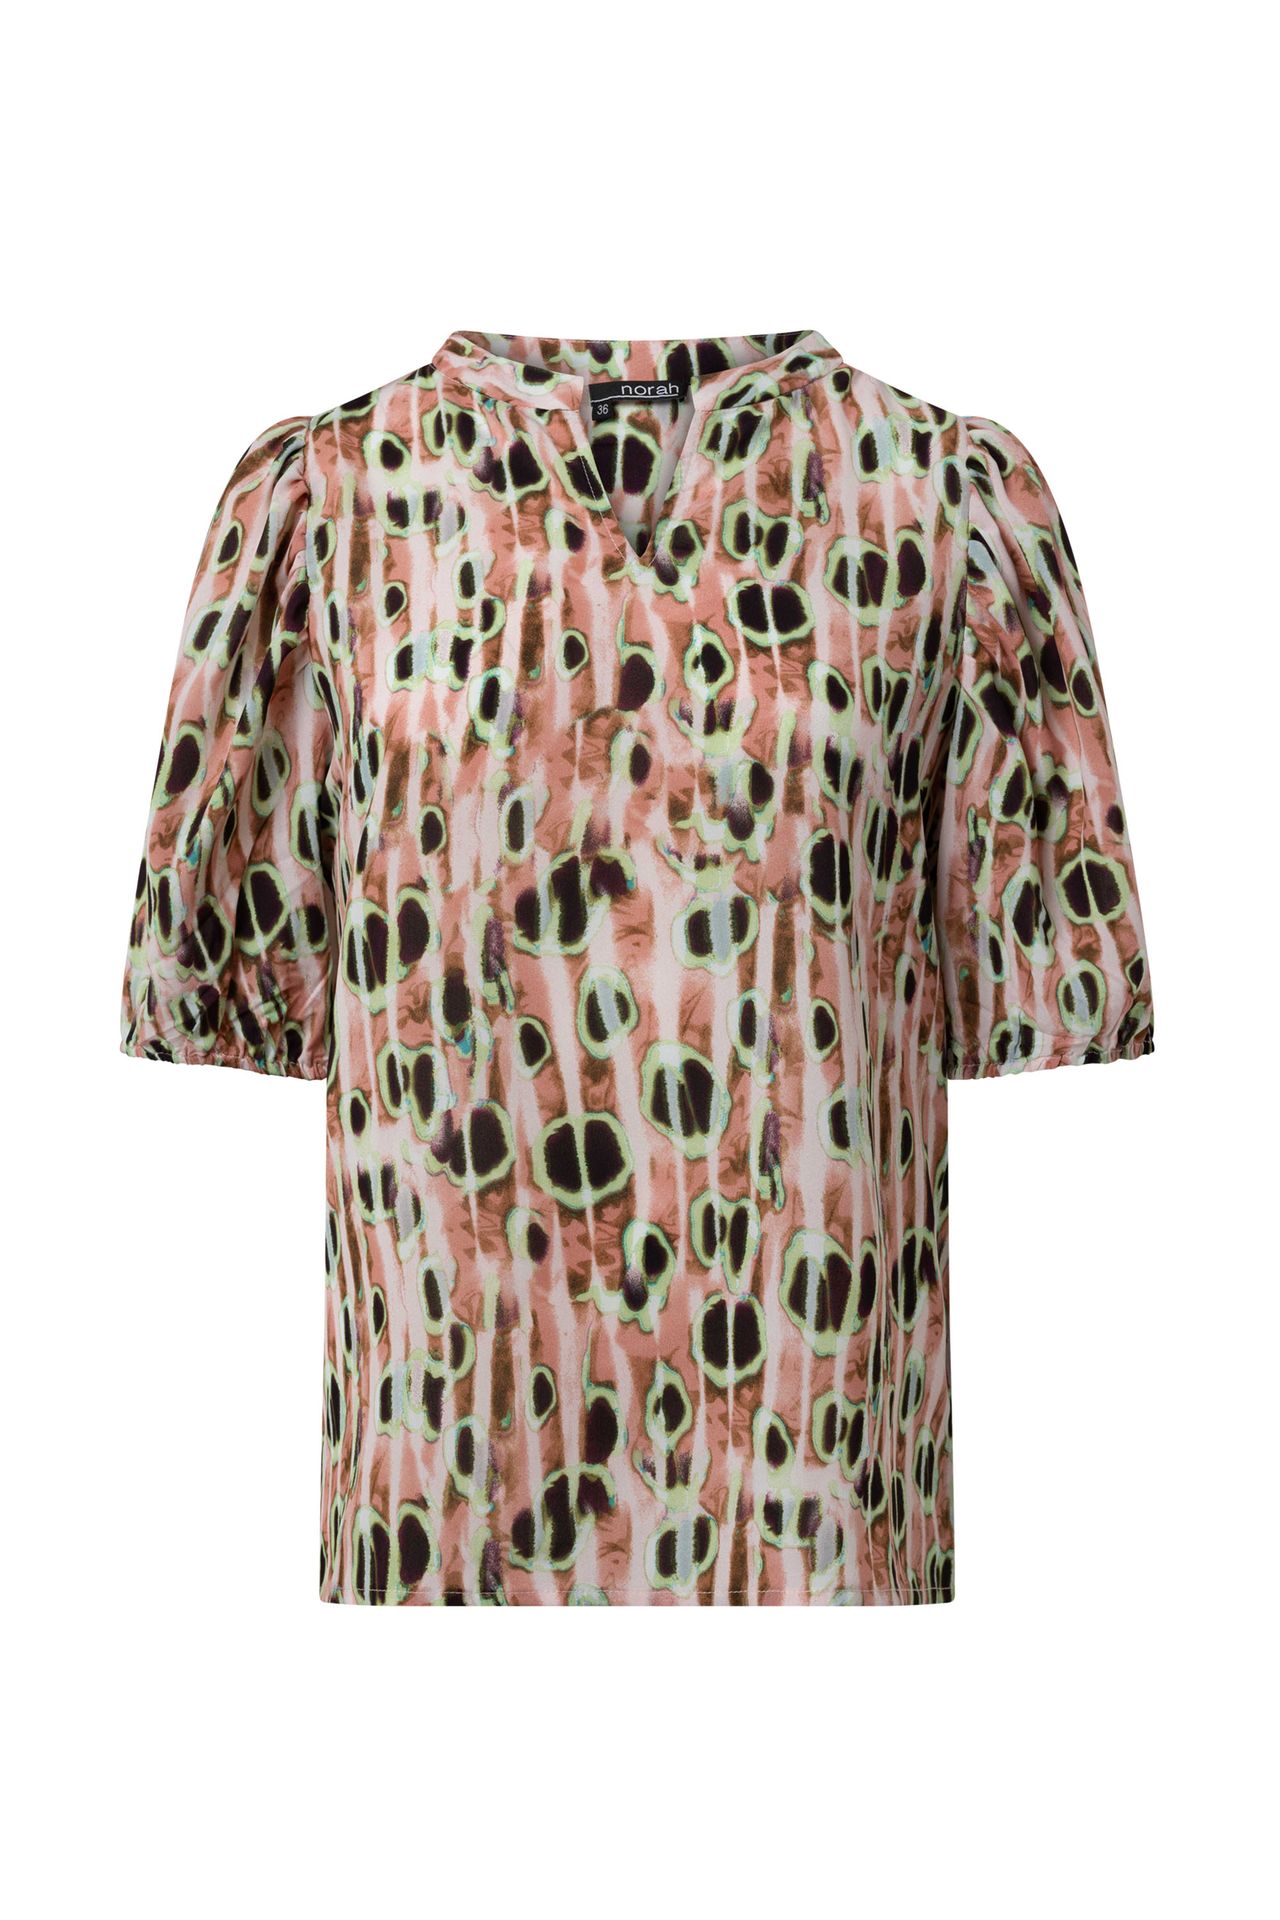 Norah Meerkleurige blouse multicolor 214435-002